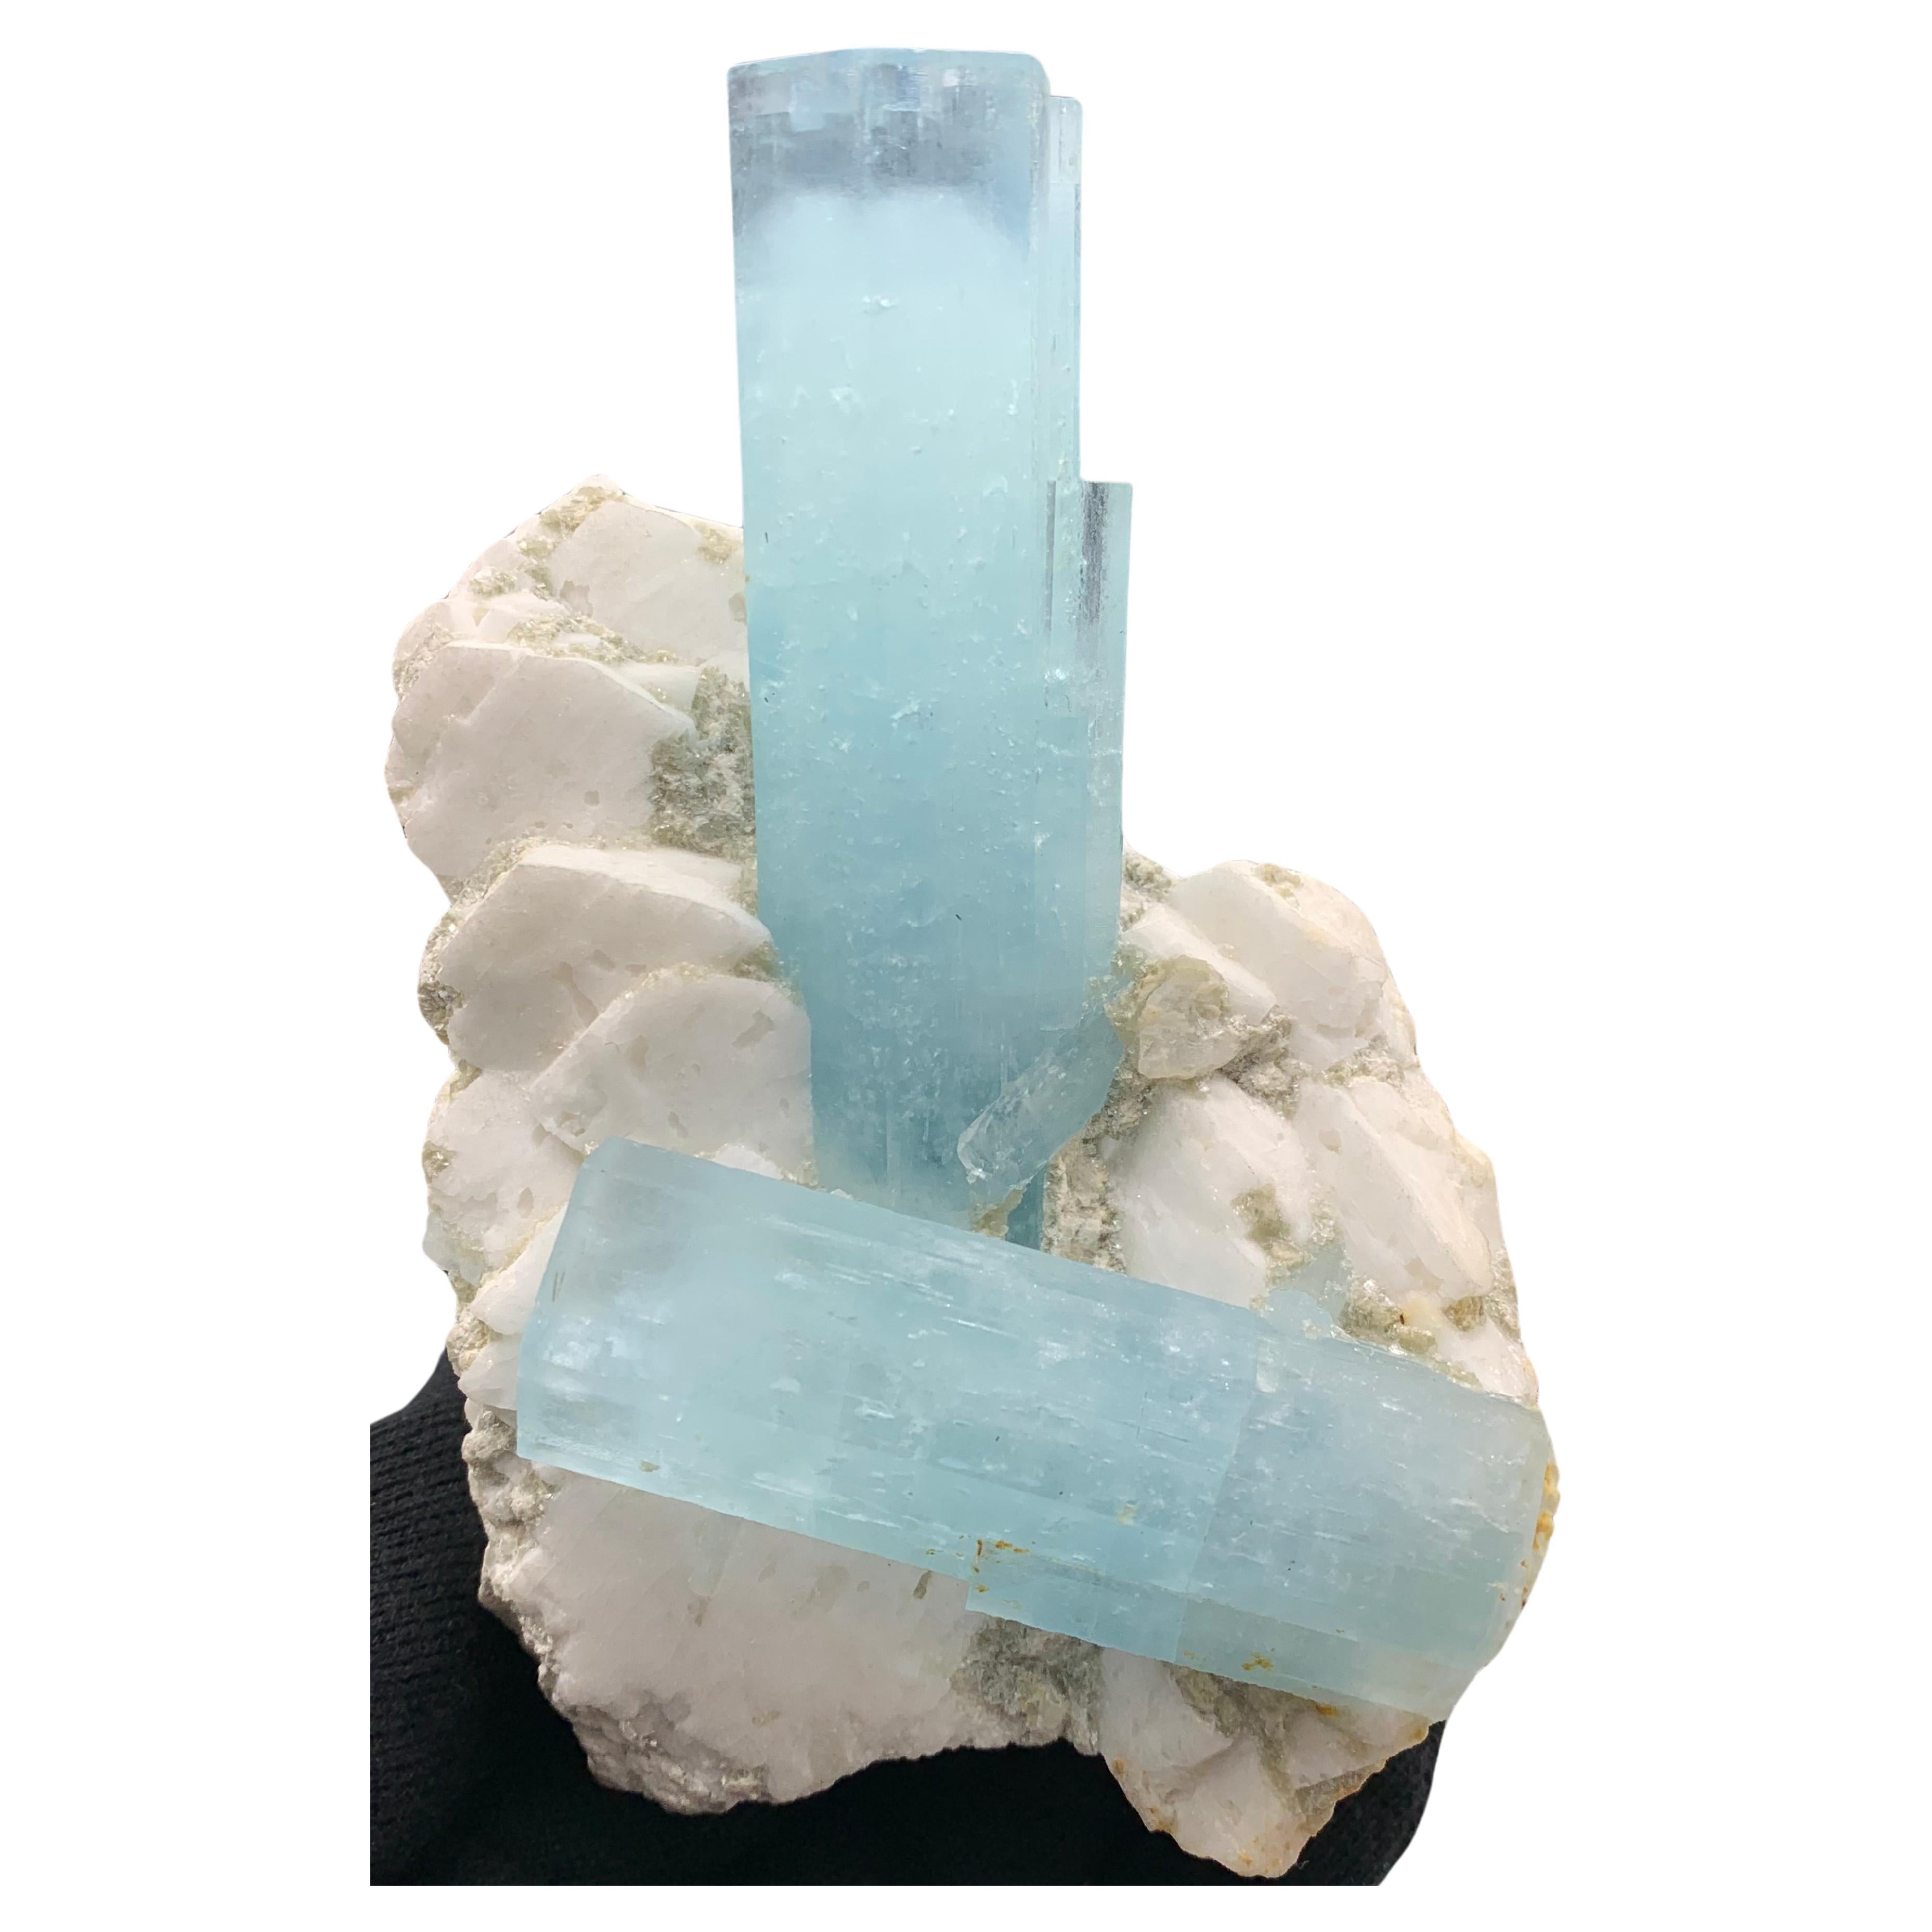 428.97 Gram Amazing Dual Aquamarine Crystal Attach With Feldspar From Pakistan  For Sale